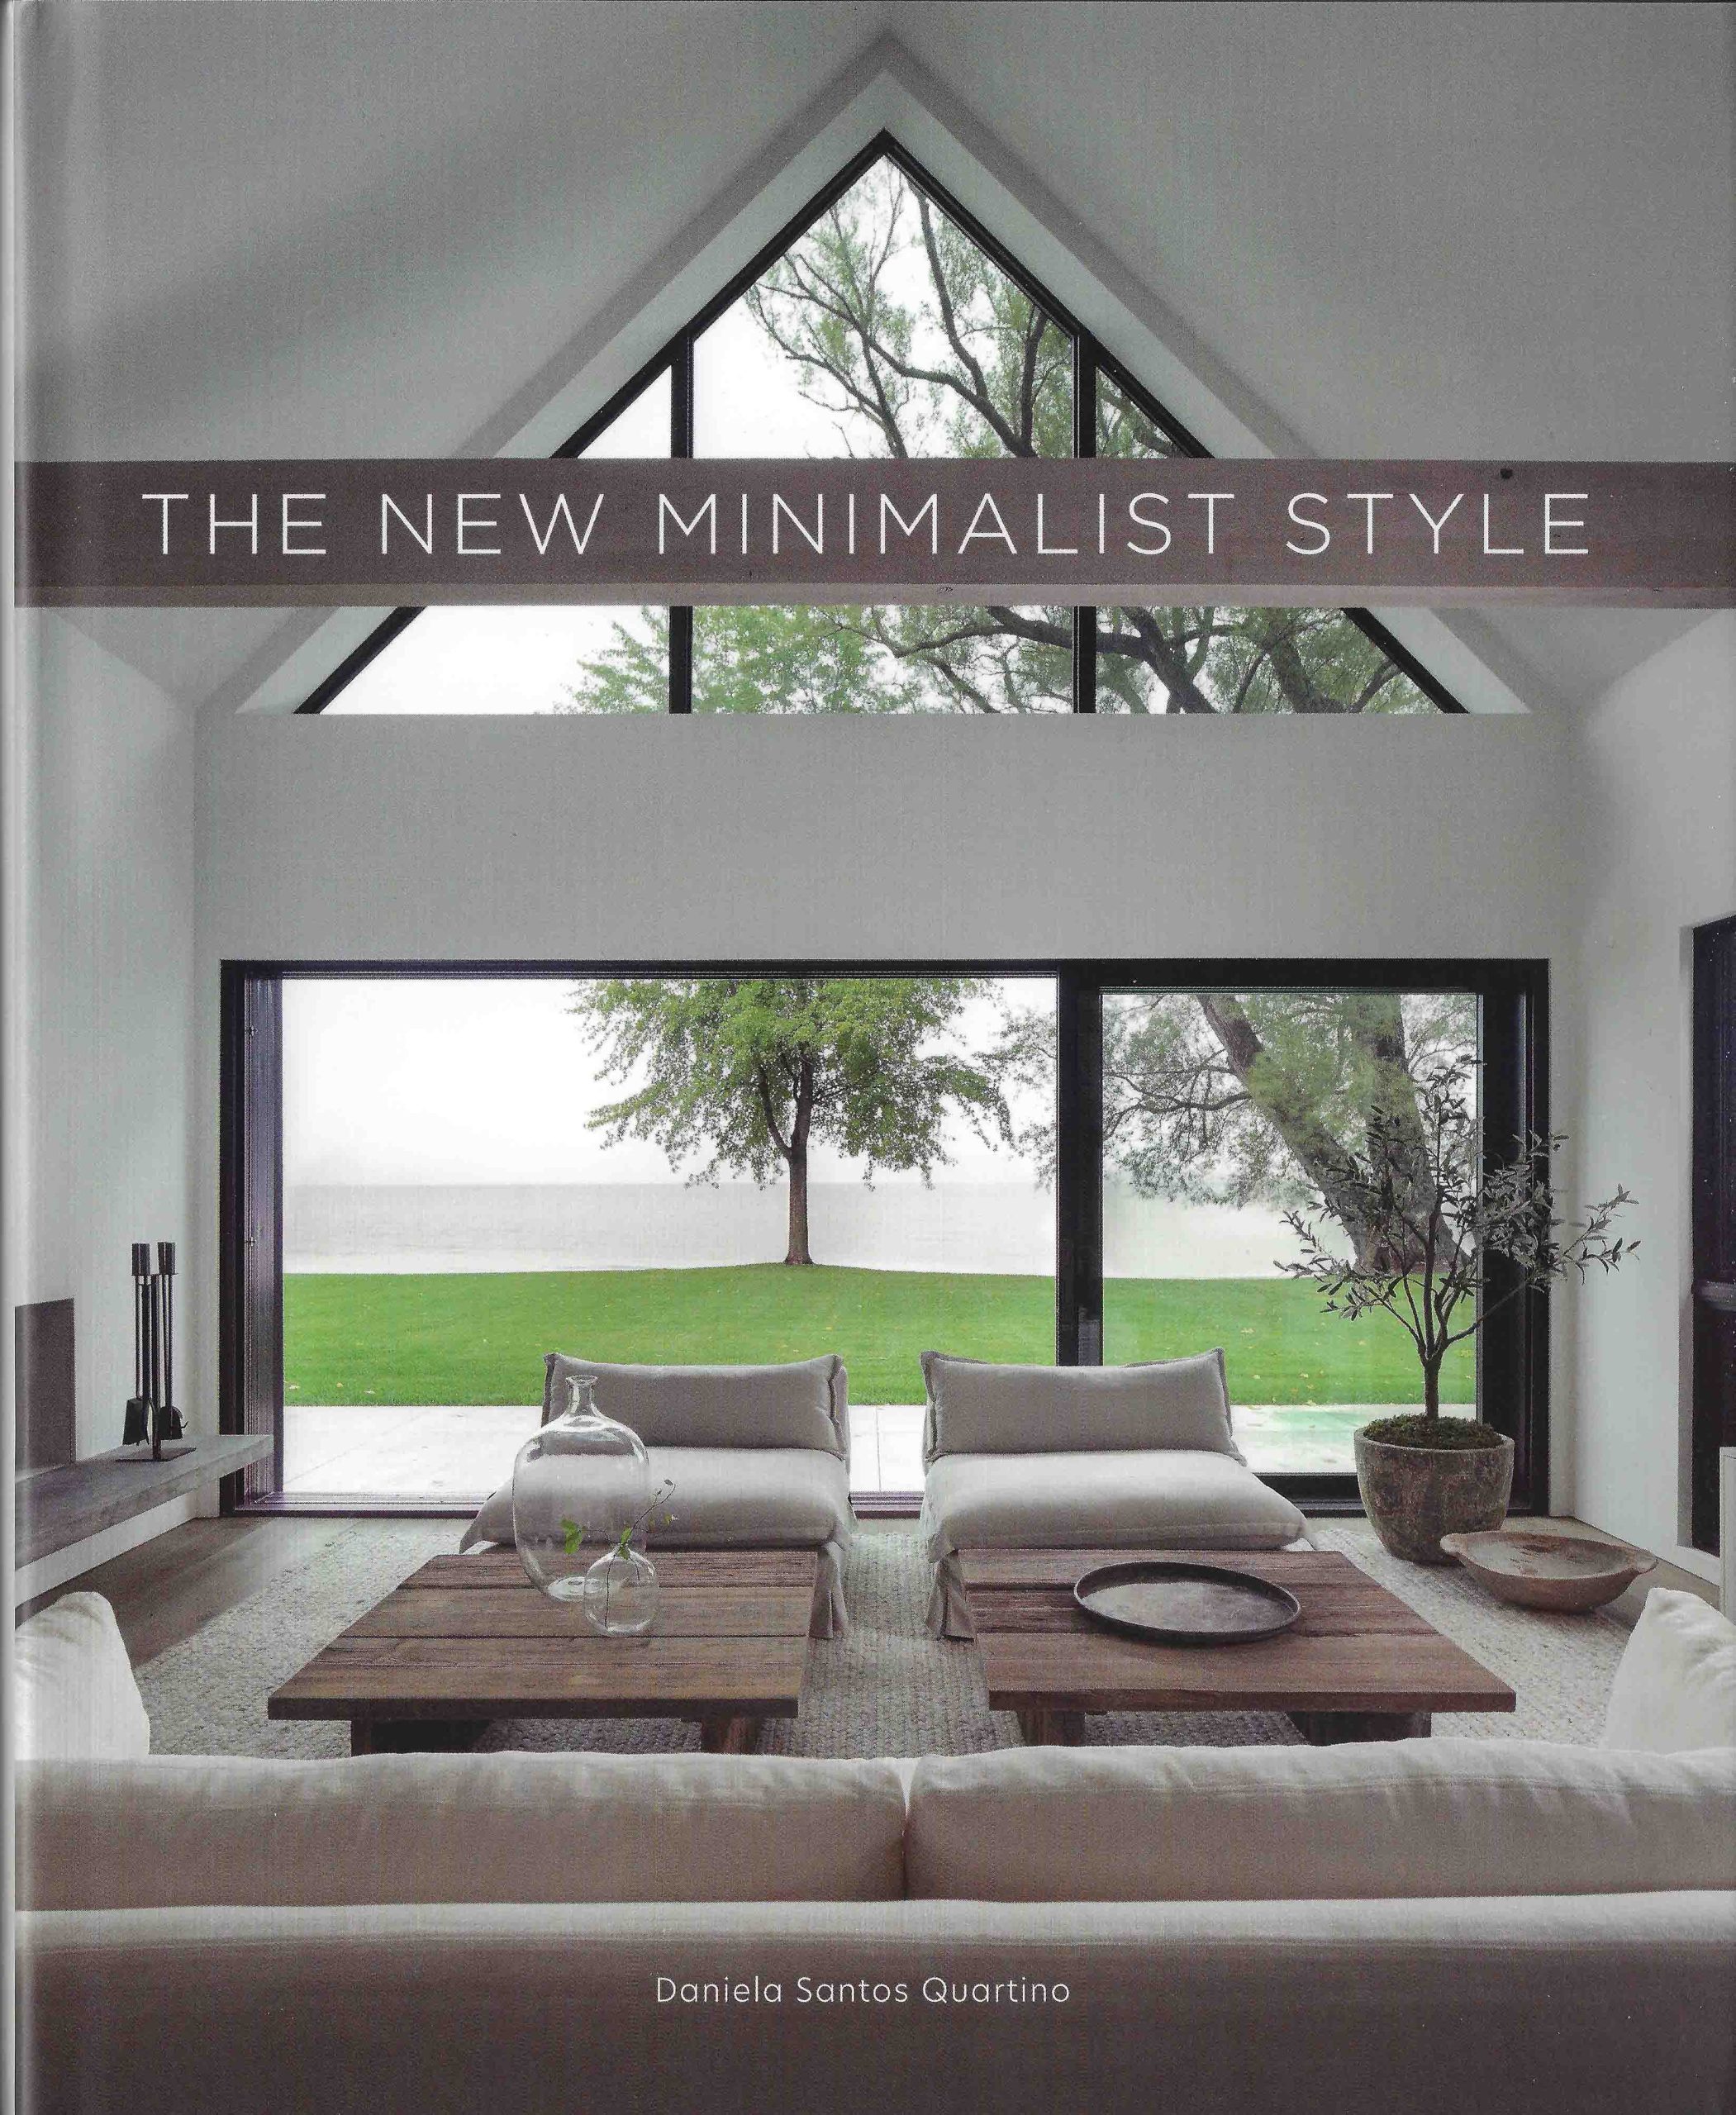 The New Minimalist Style by Daniela Santos Quartino